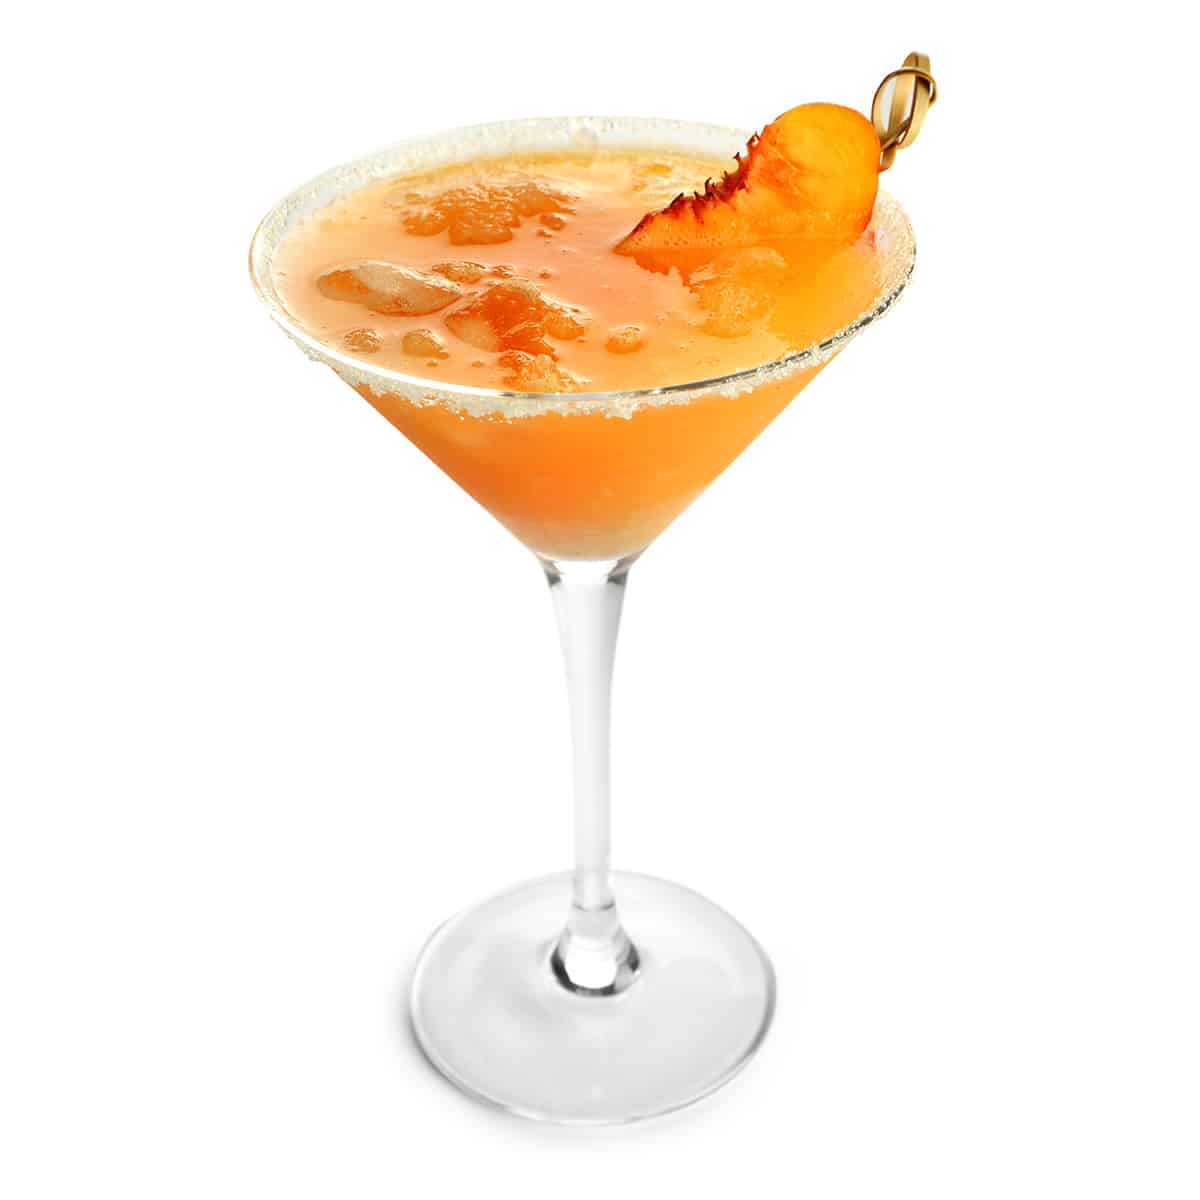 Rosemary Peach Margarita - 1.5oz Tequila, .75oz Rosemary Peach Syrup, .75oz Lime Juice